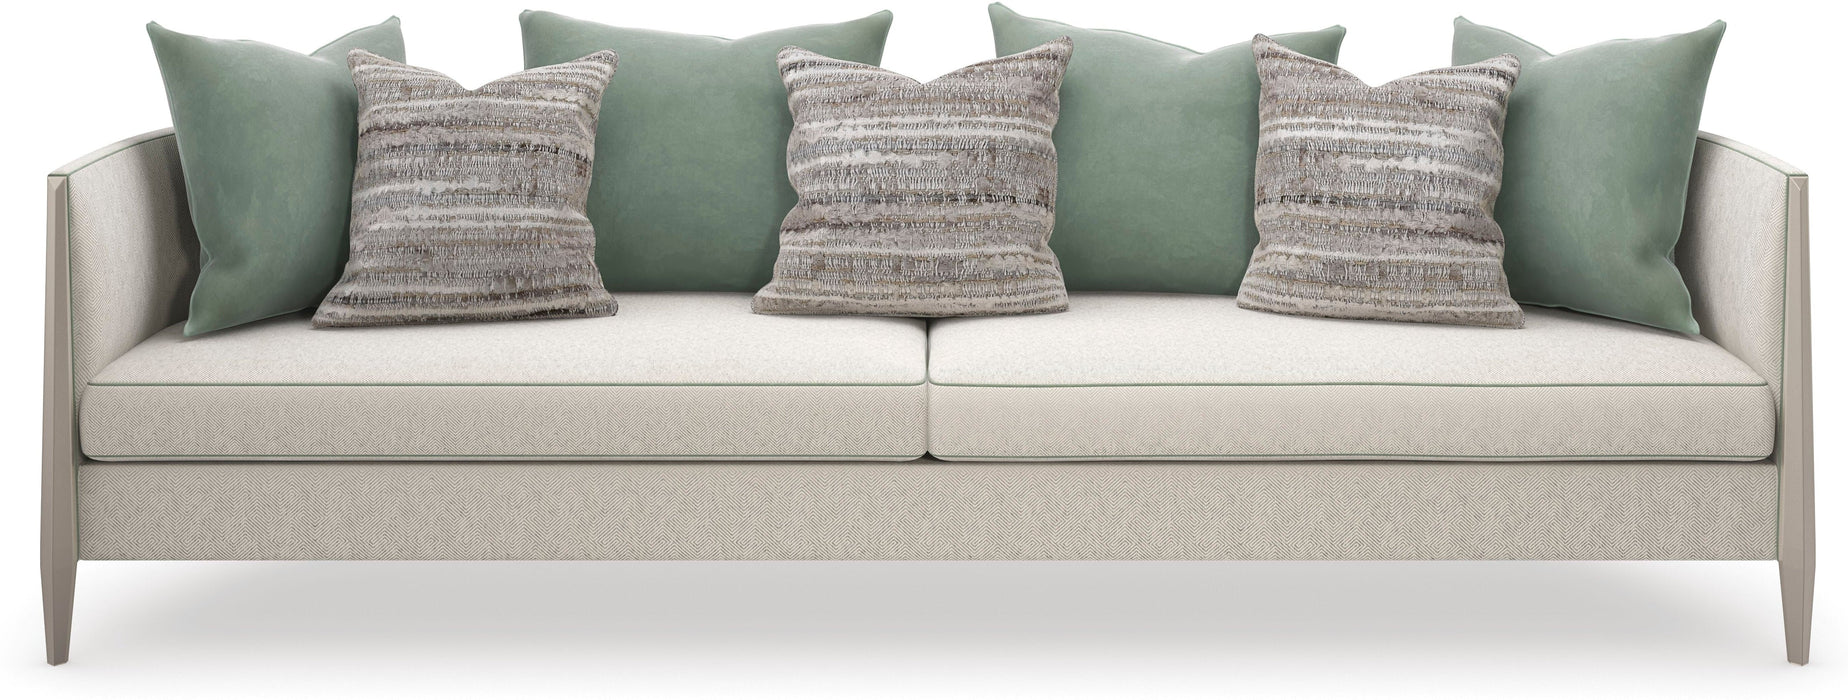 Caracole Upholstery Piping Hot Sofa 110